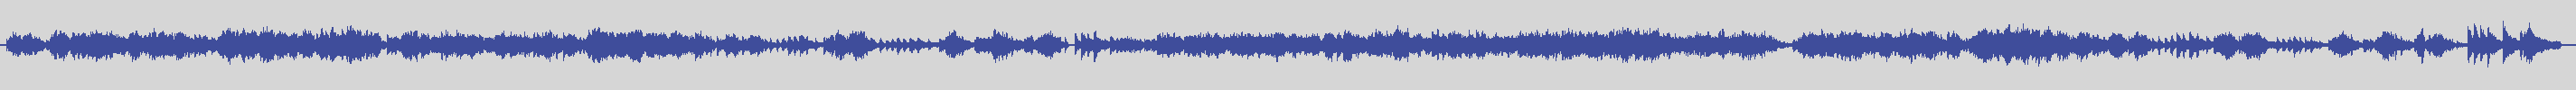 big_music_classic [BMC008] Frédéric Chopin - Fantasie Op. 49 [Original Version] audio wave form